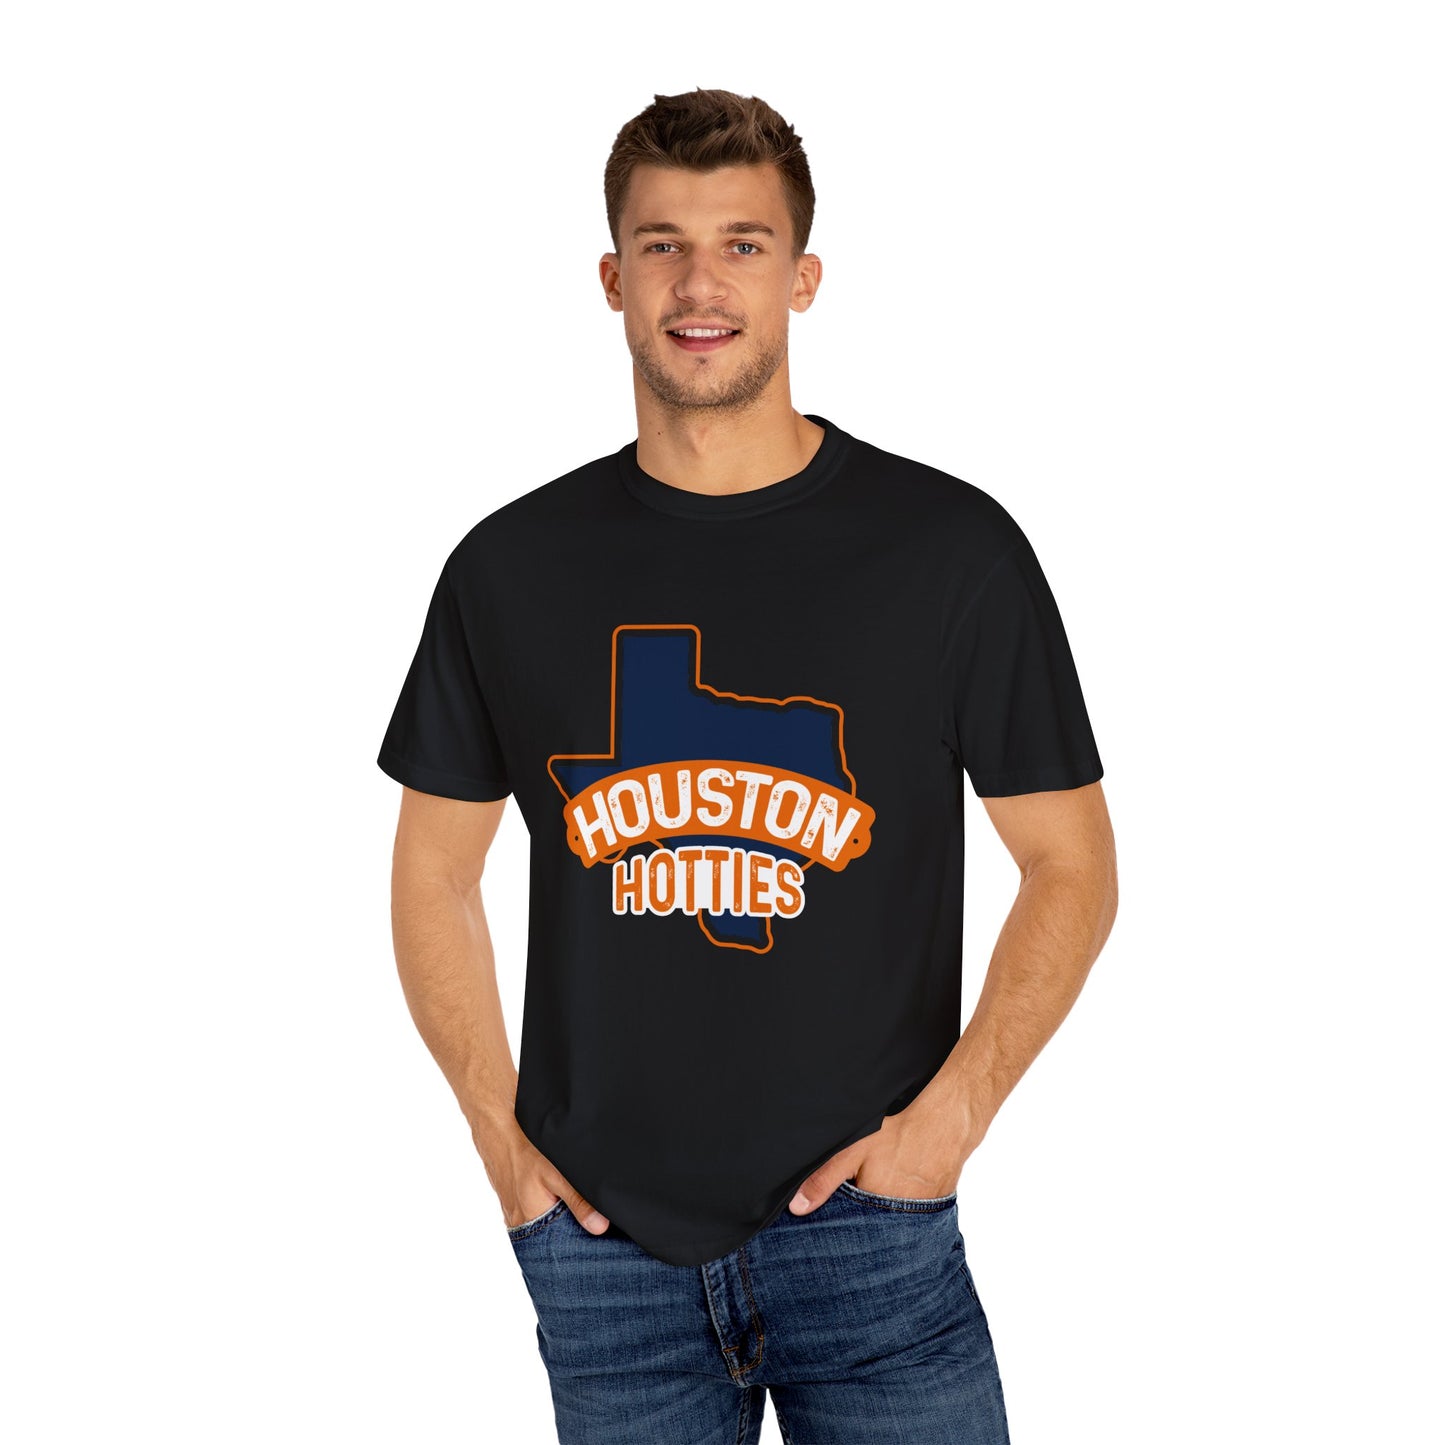 Houston Hotties T-shirt